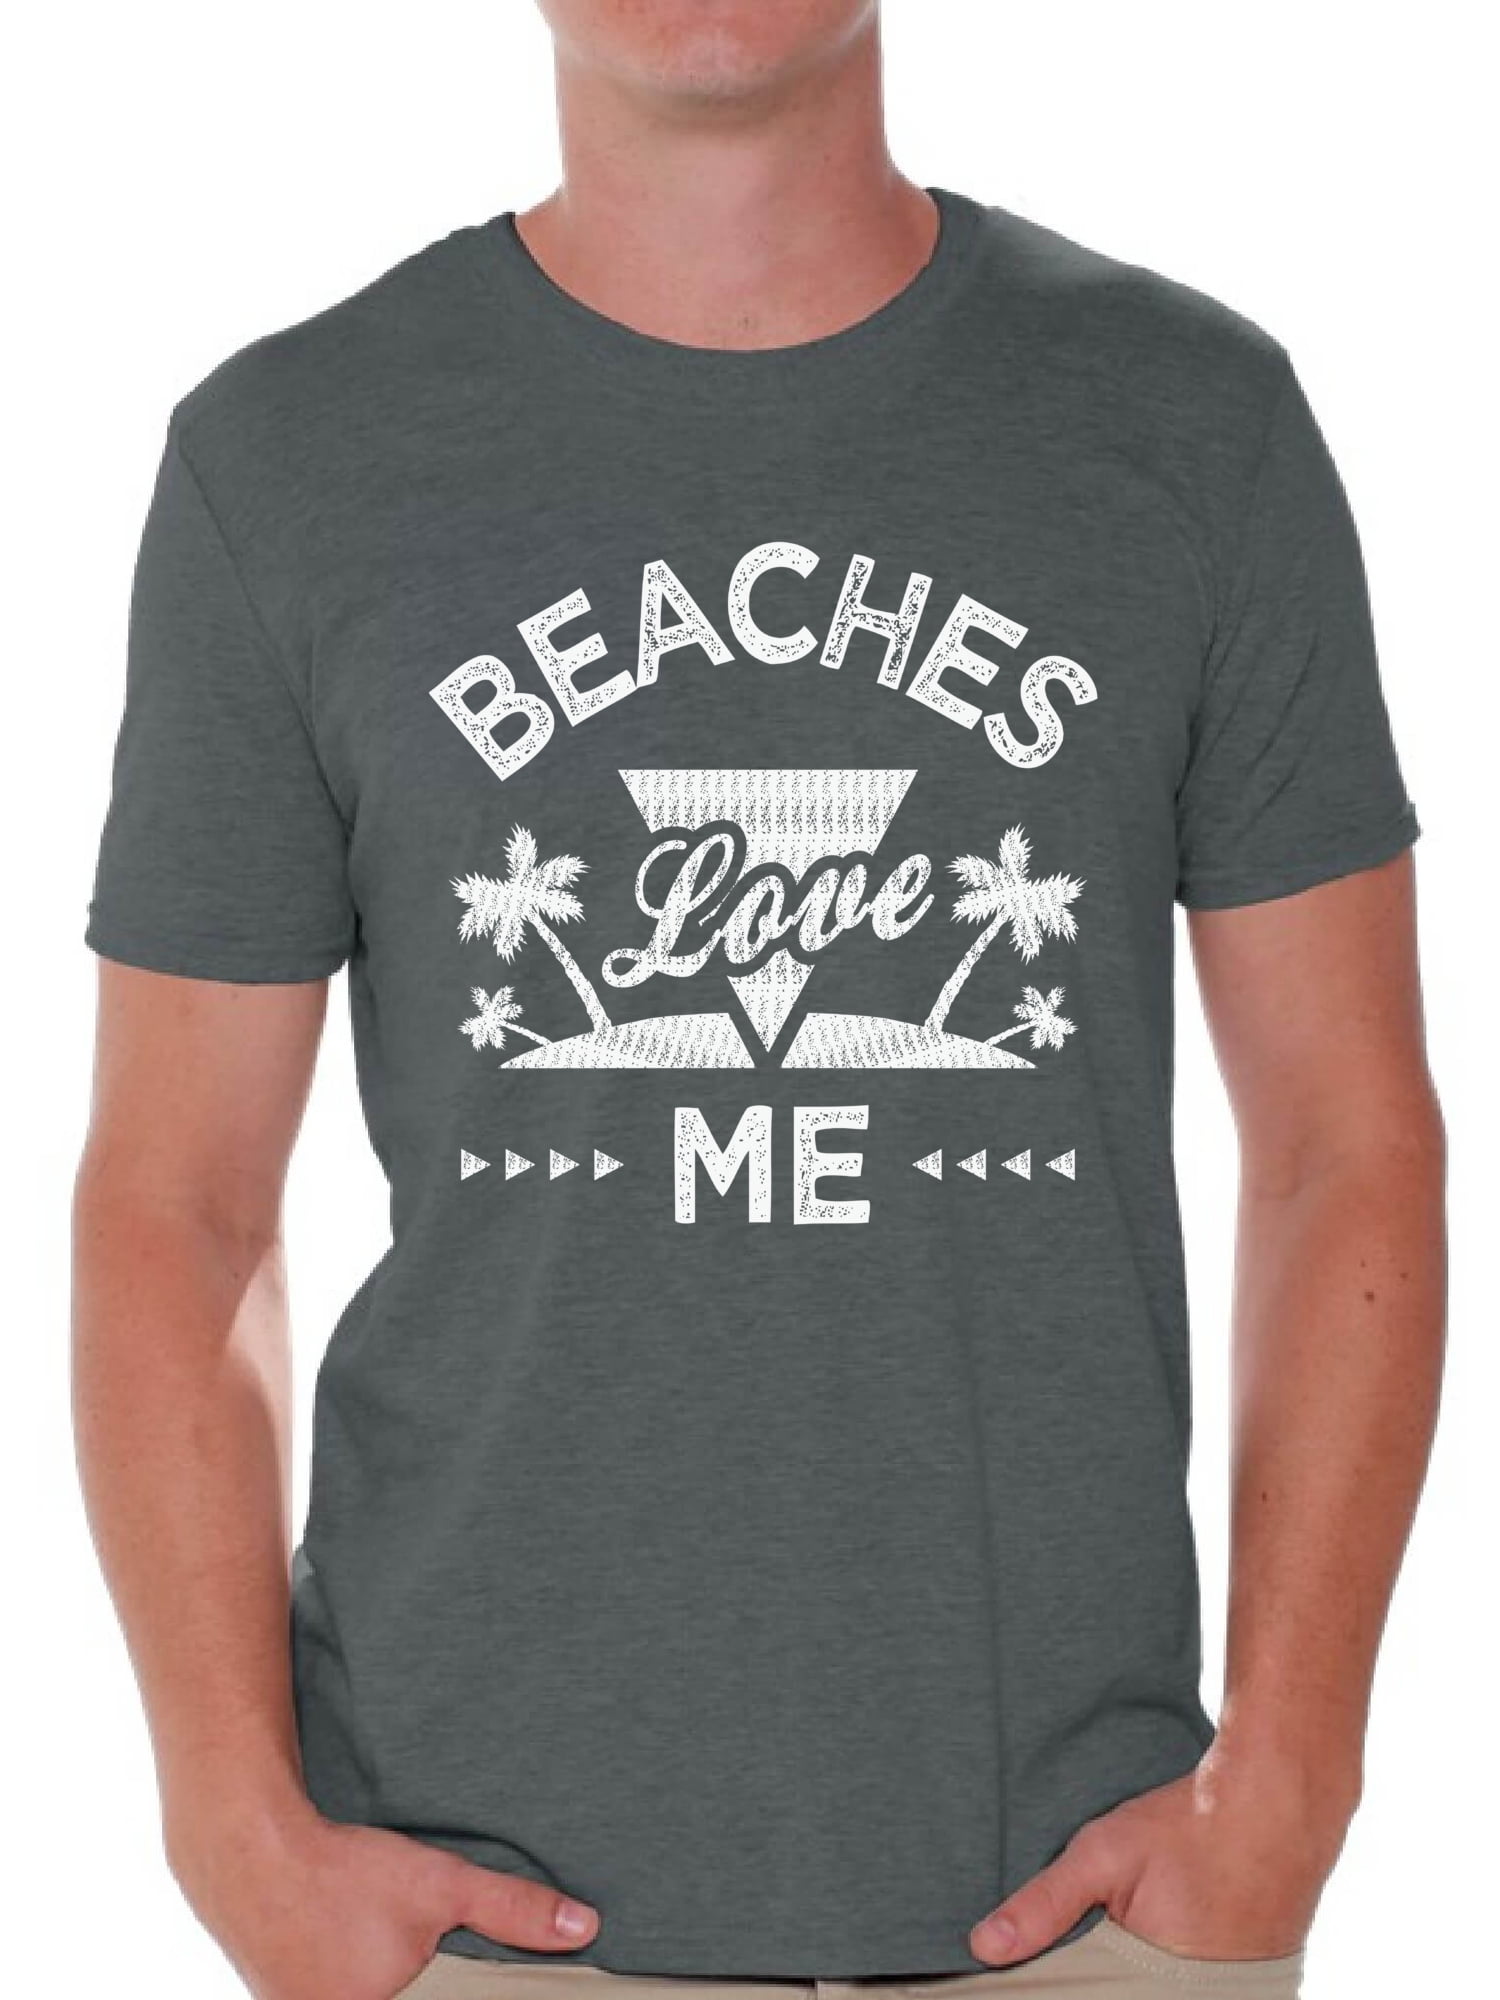 Gift for Her Summer T-Shirt Gift for Him Beach Tee Beach Life T-shirt Unisex Shirt Summer Vibes Vacation Retro Shirt Gift